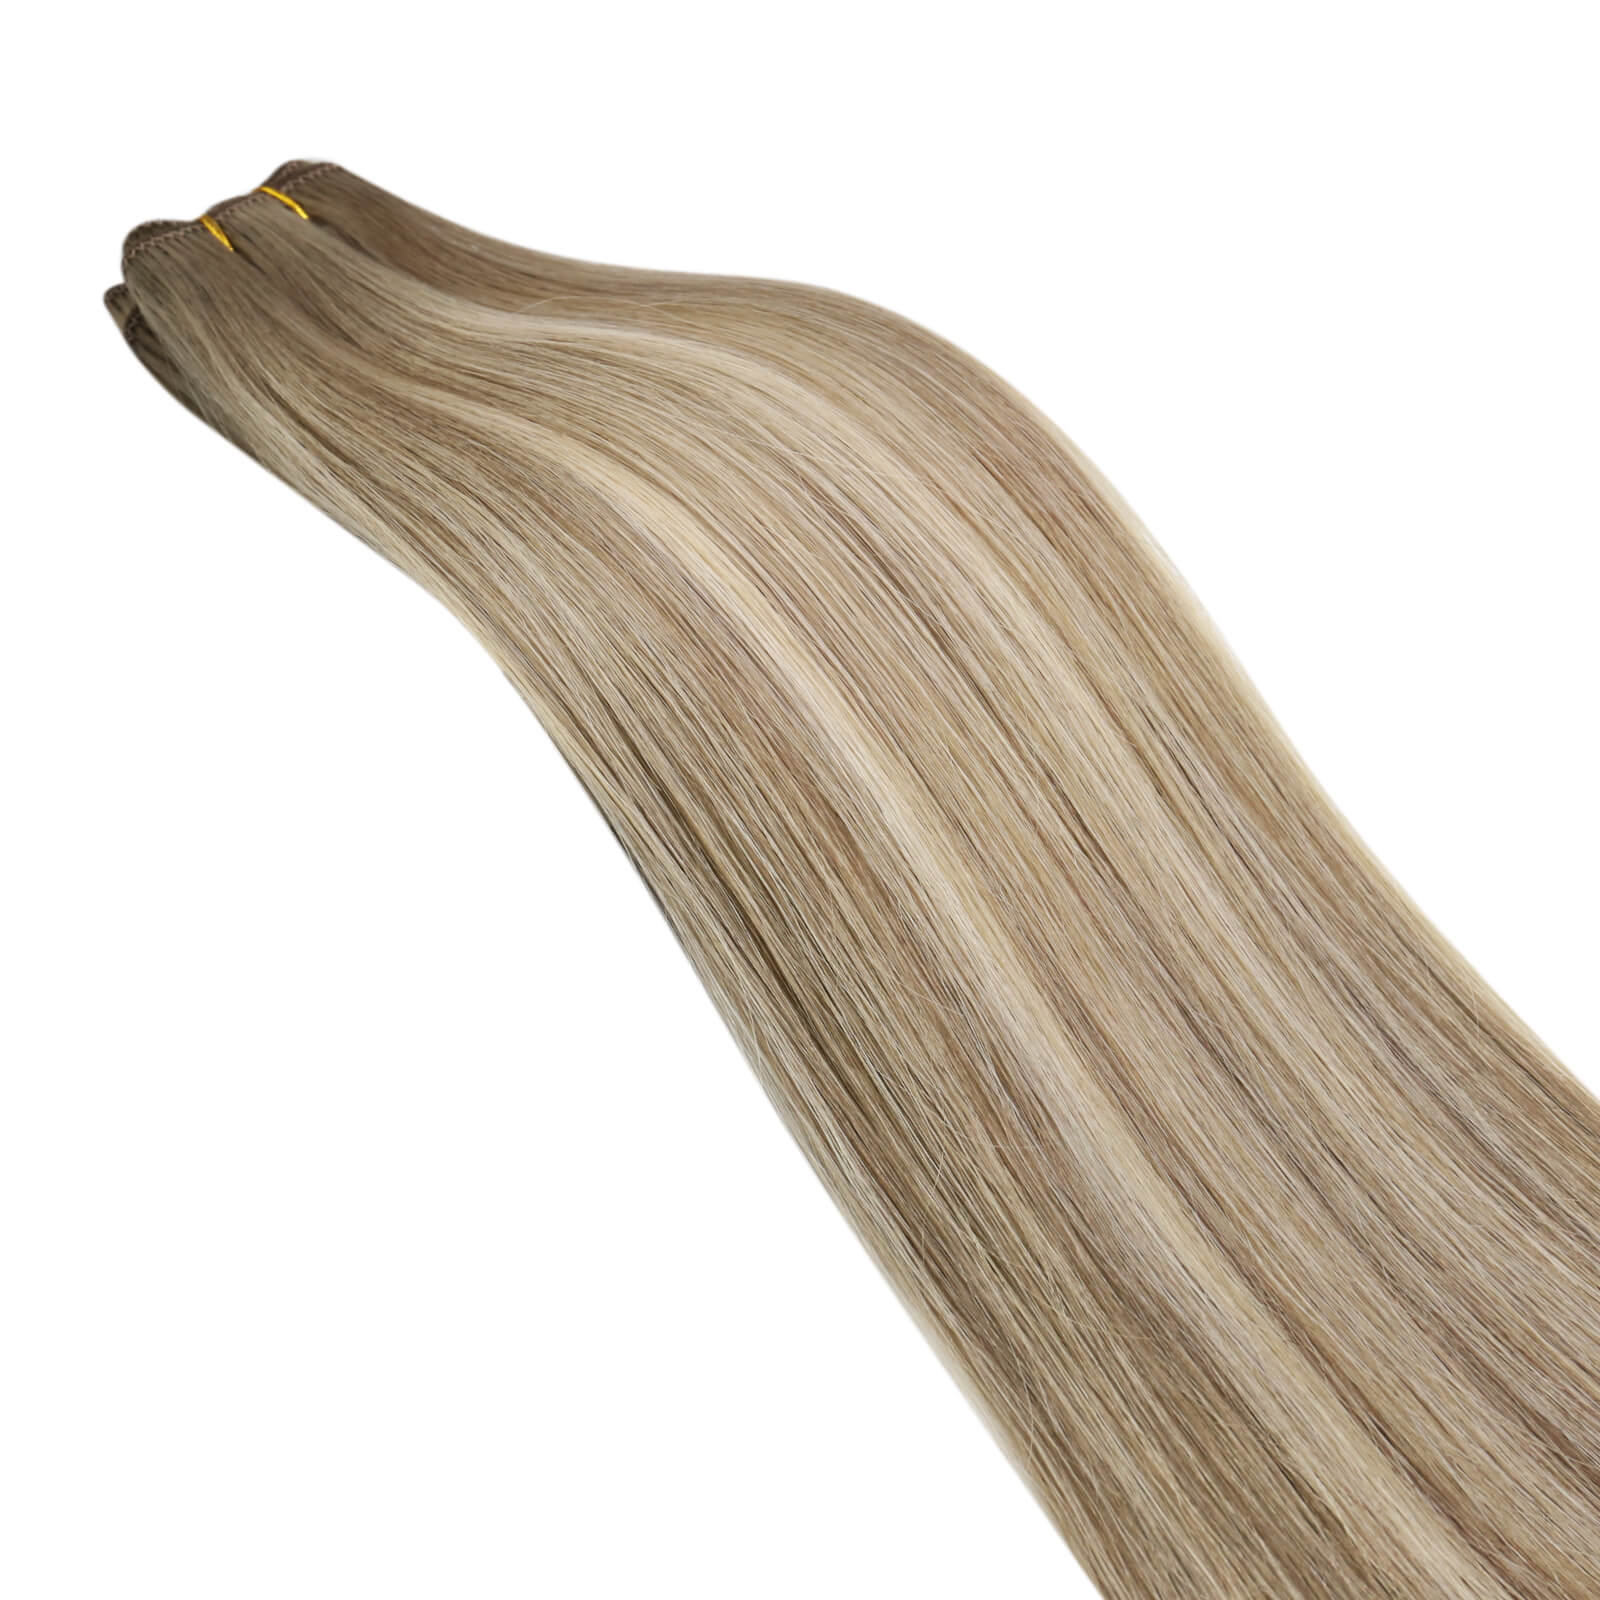 virgin human hair extensions sew in hair weft